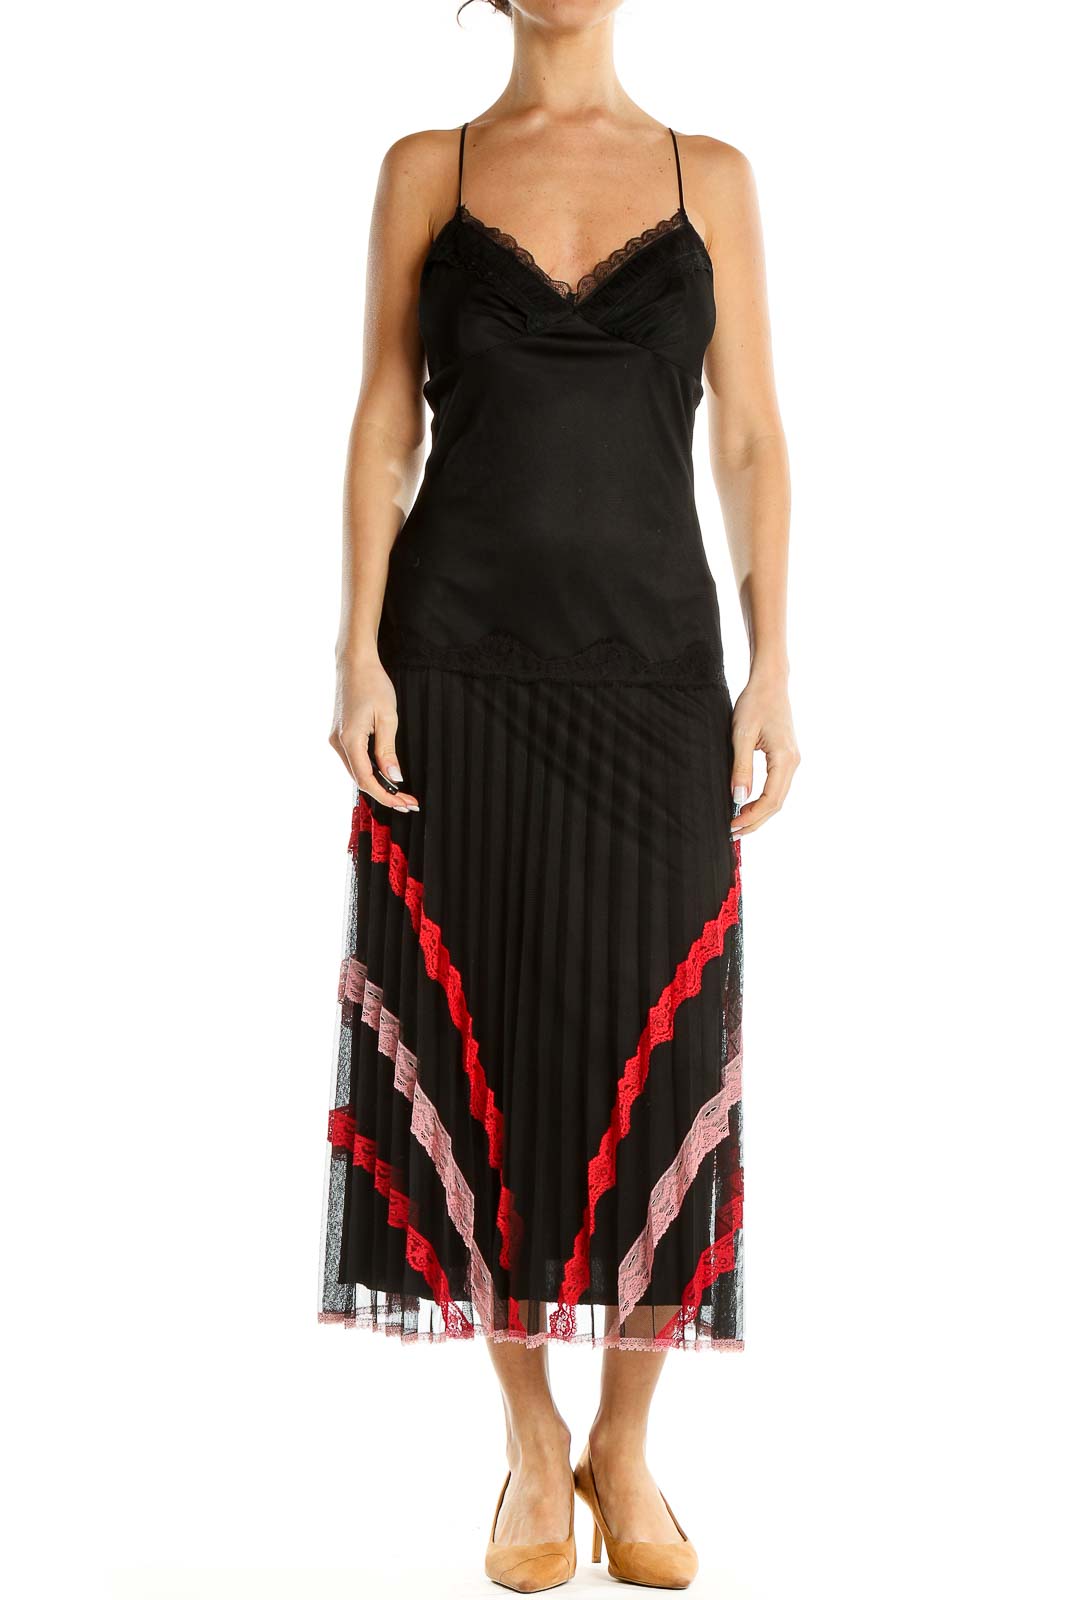 Black Slip Pleated Skirt Lace Trim Cocktail Dress Front